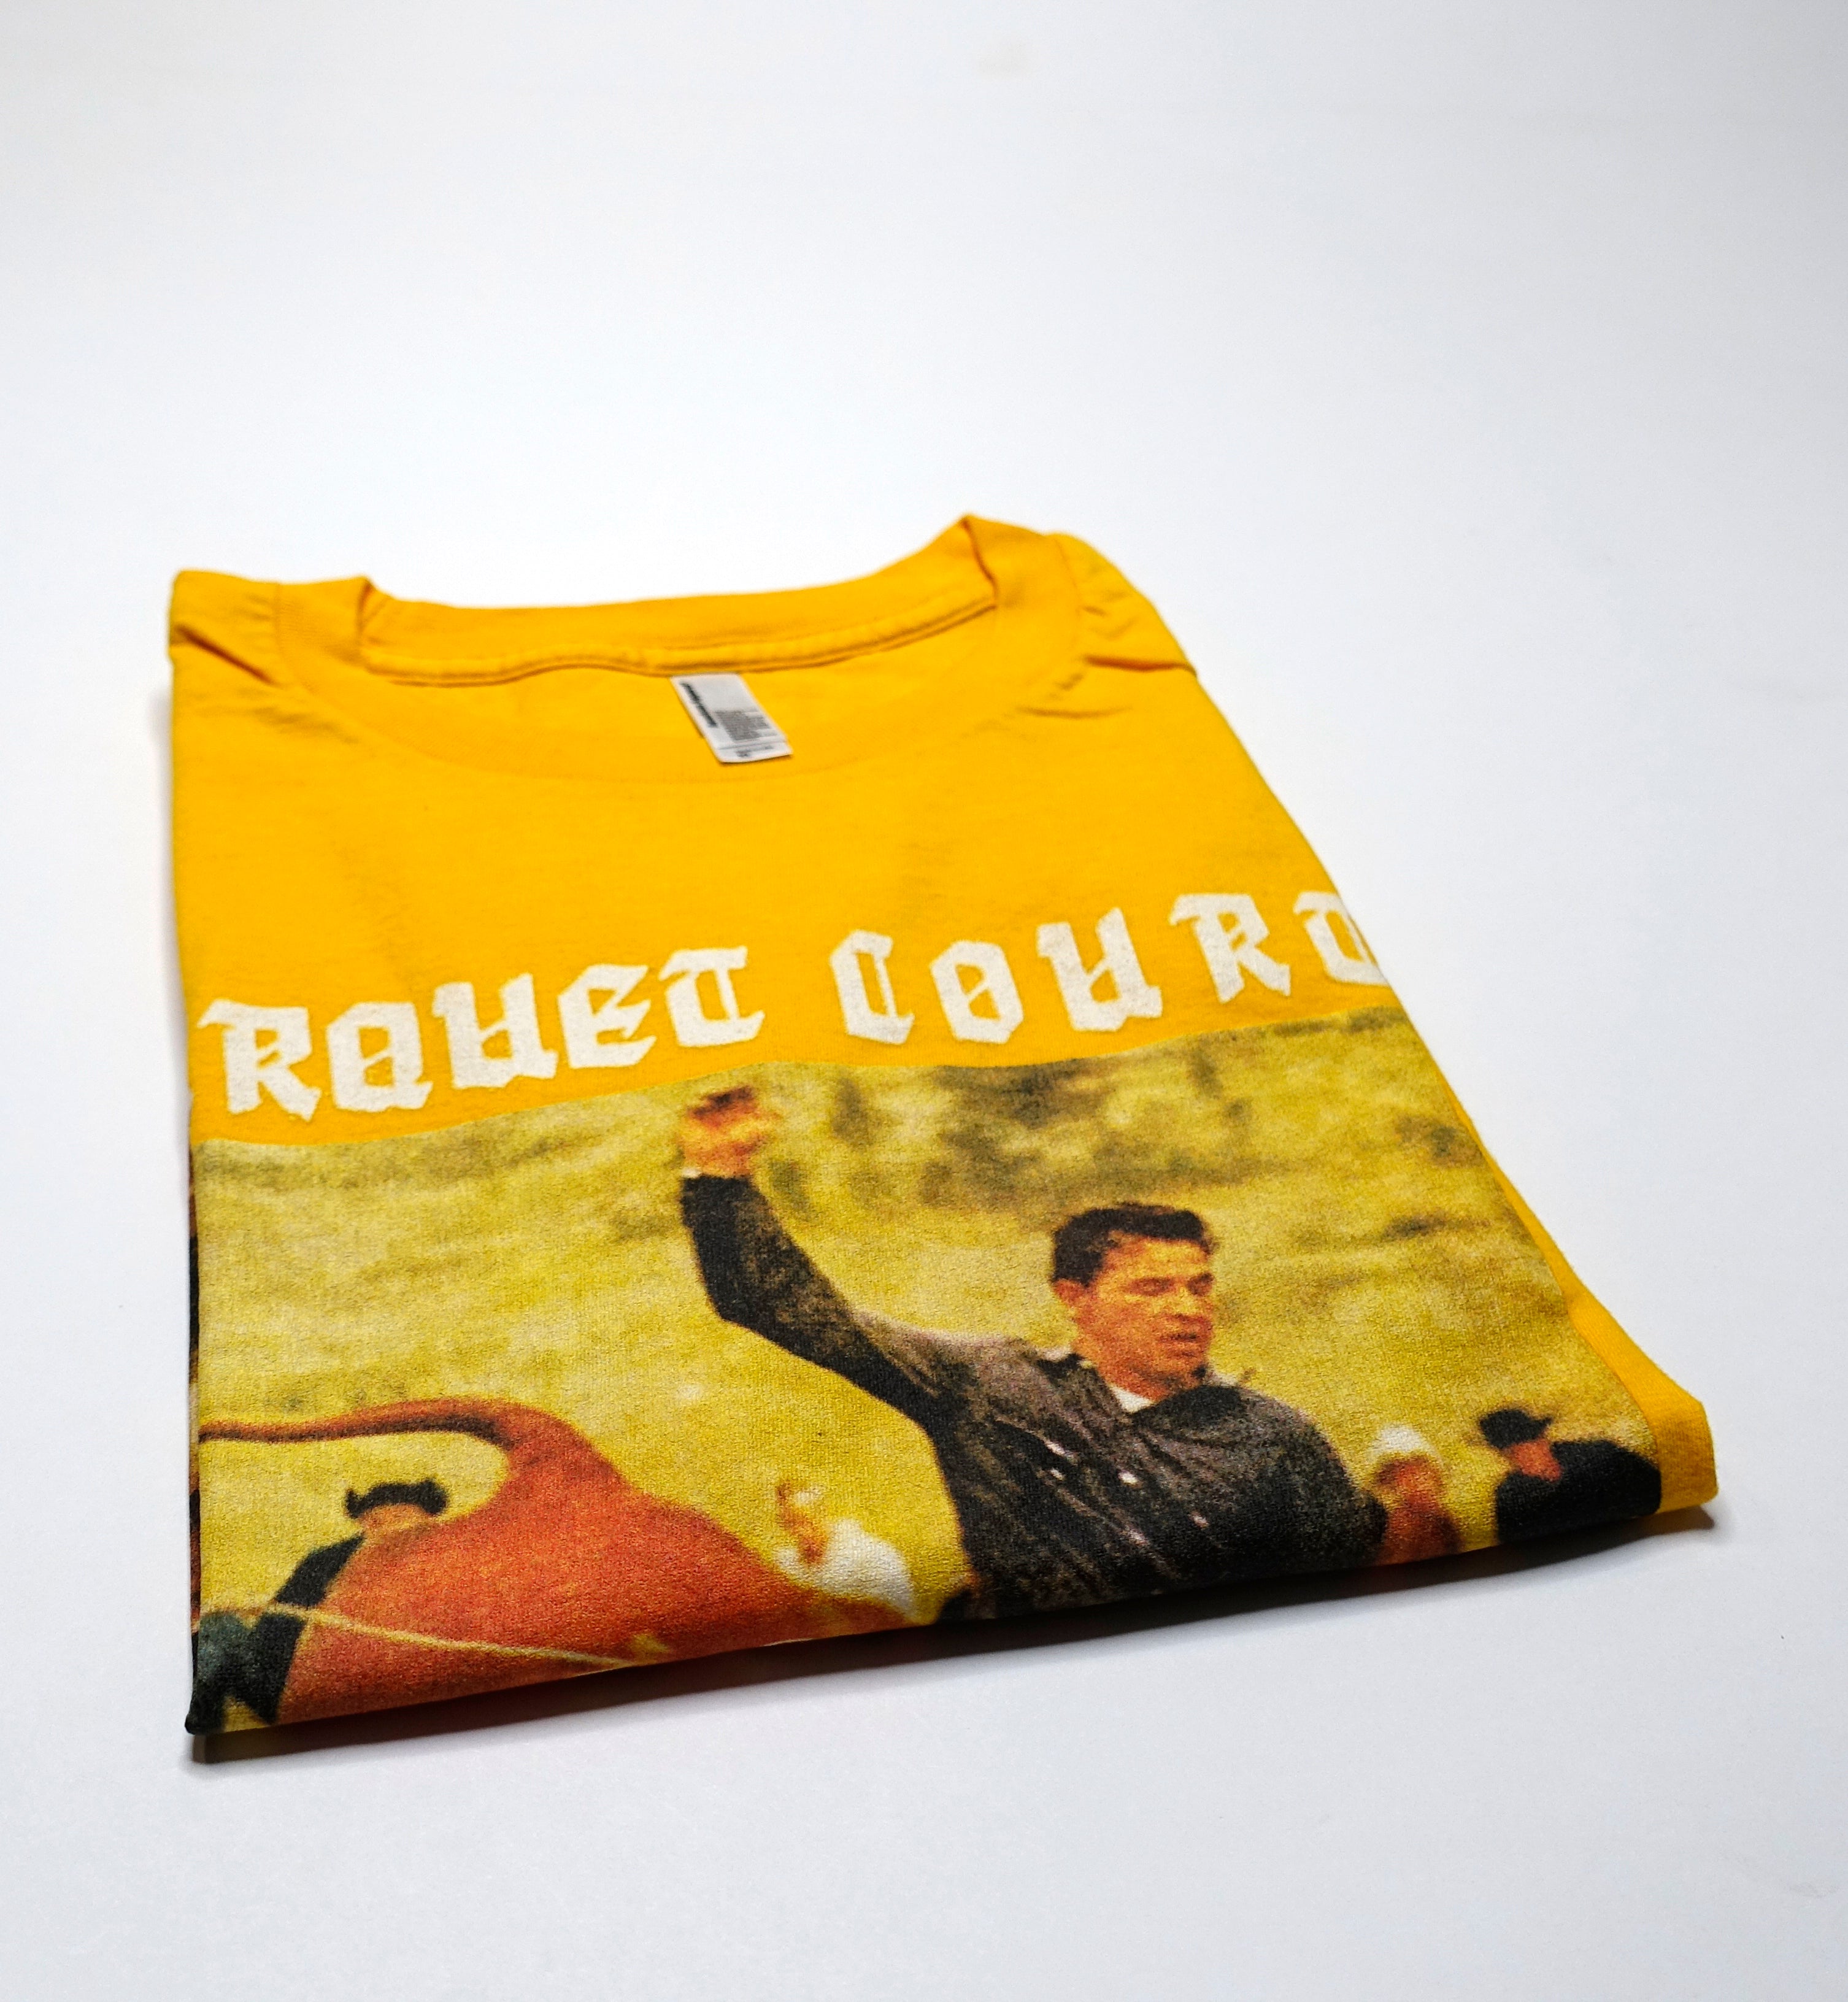 Parquet Courts - Light Up Gold / Dull Tools 2012 Tour Shirt Size XL